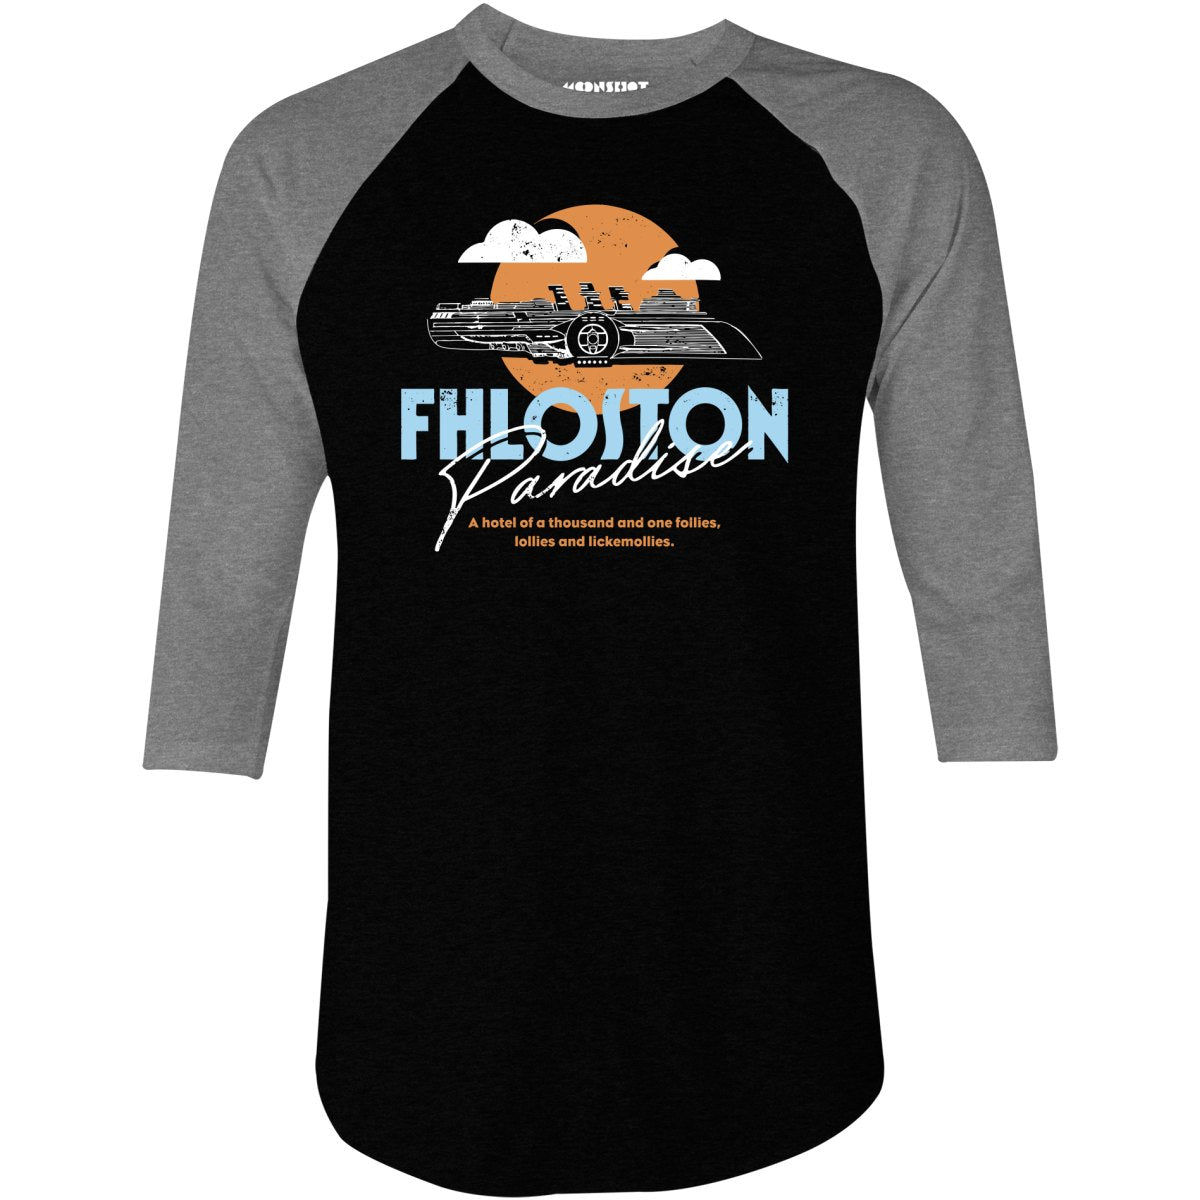 Fhloston Paradise - The Fifth Element - 3/4 Sleeve Raglan T-Shirt